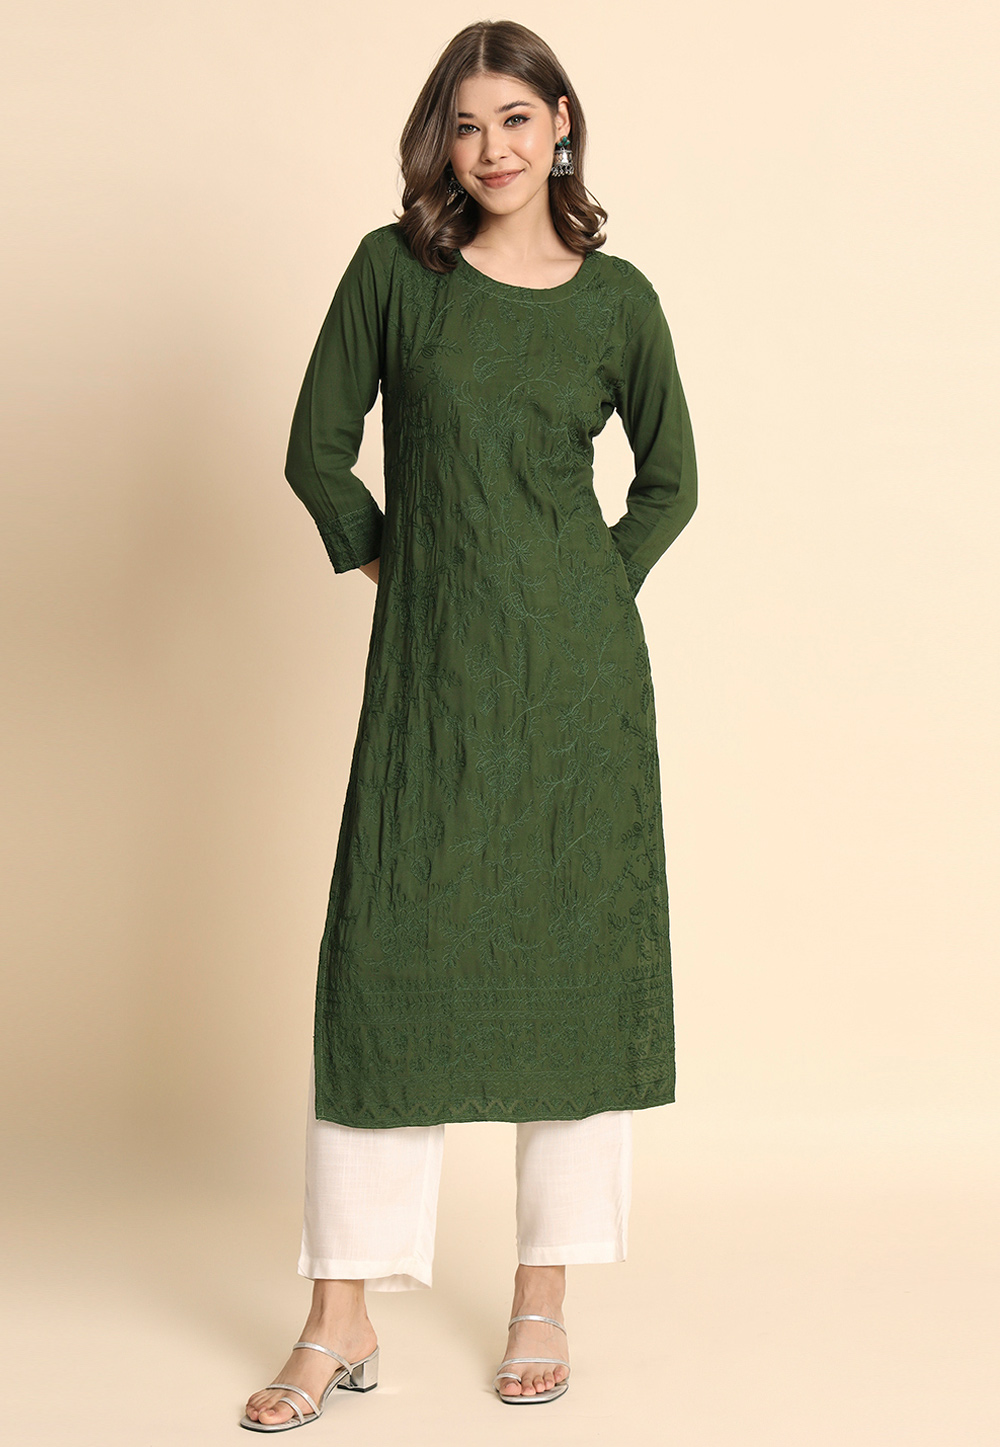 Slub Rayon Casual Wear Kurti In Mehendi Green Colour - KR5550093